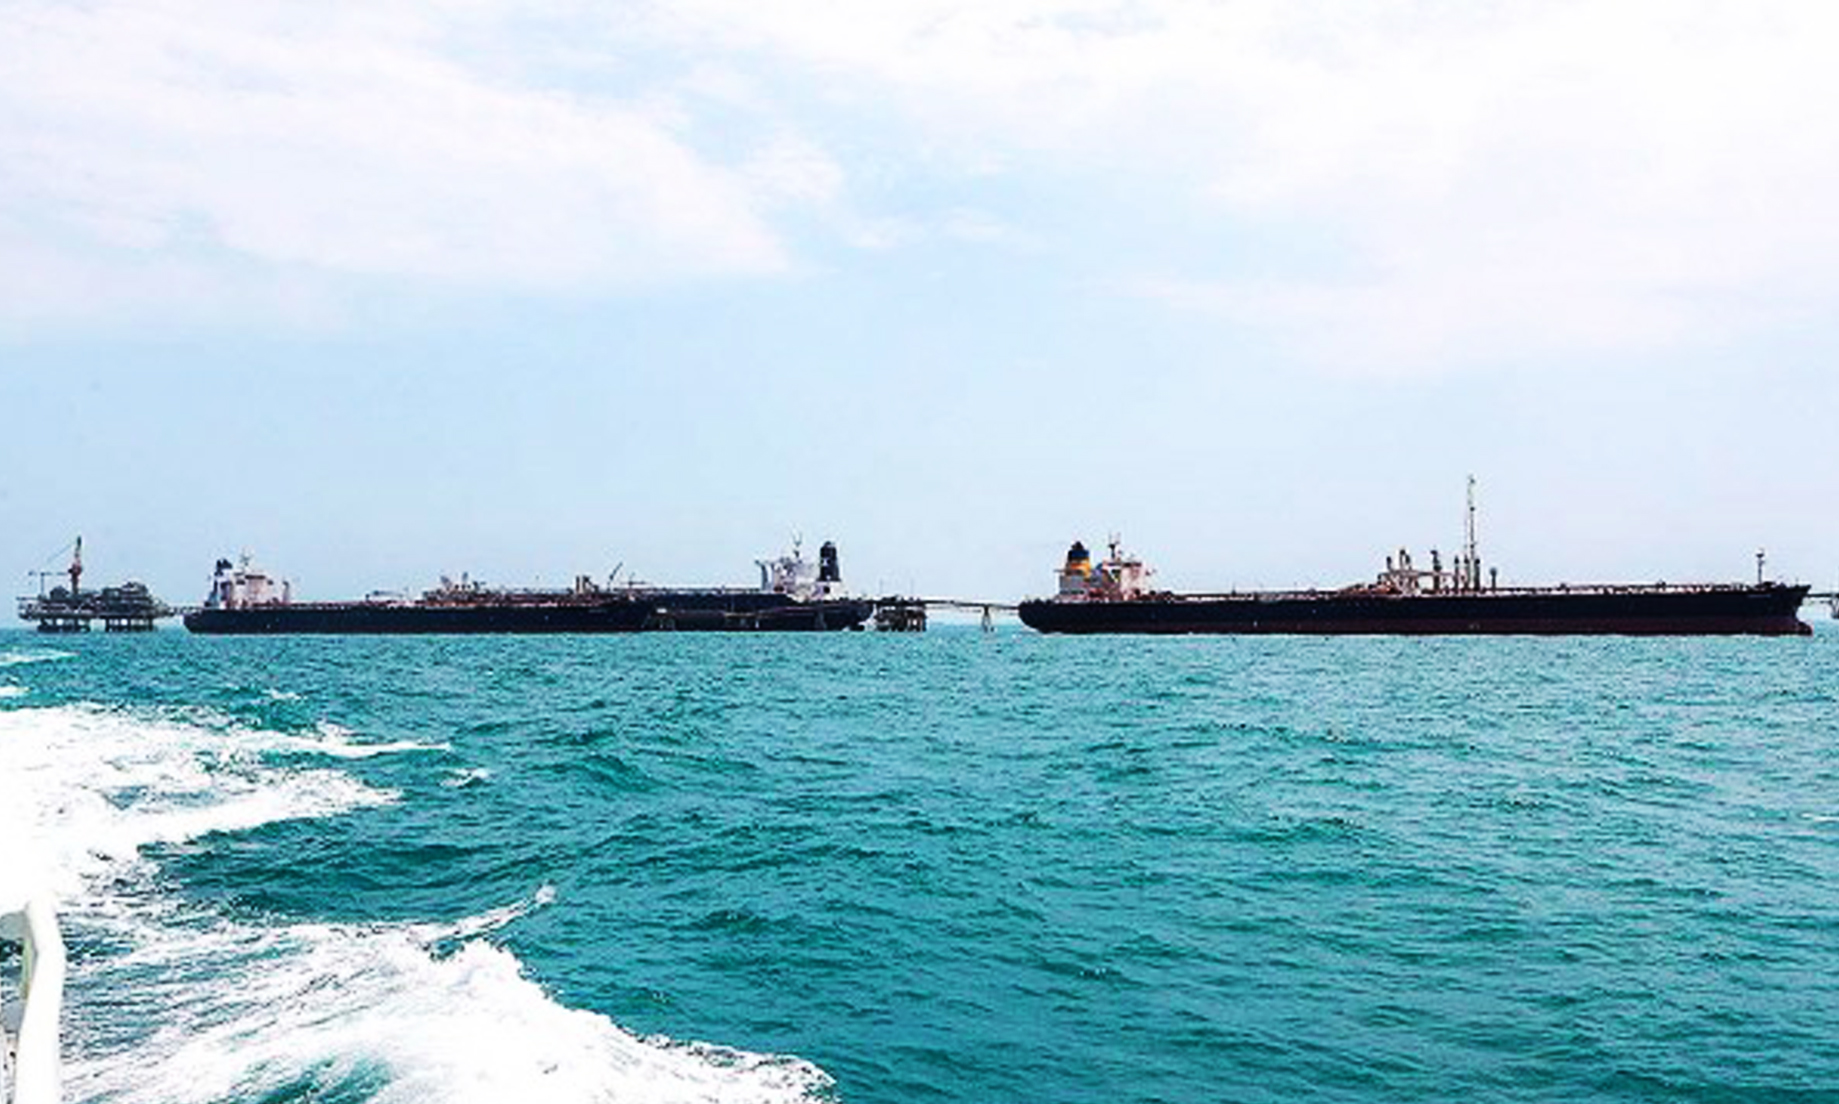 Tanker seizure: Britain warns Iran against choosing ‘dangerous path’ – Foreign Secretary